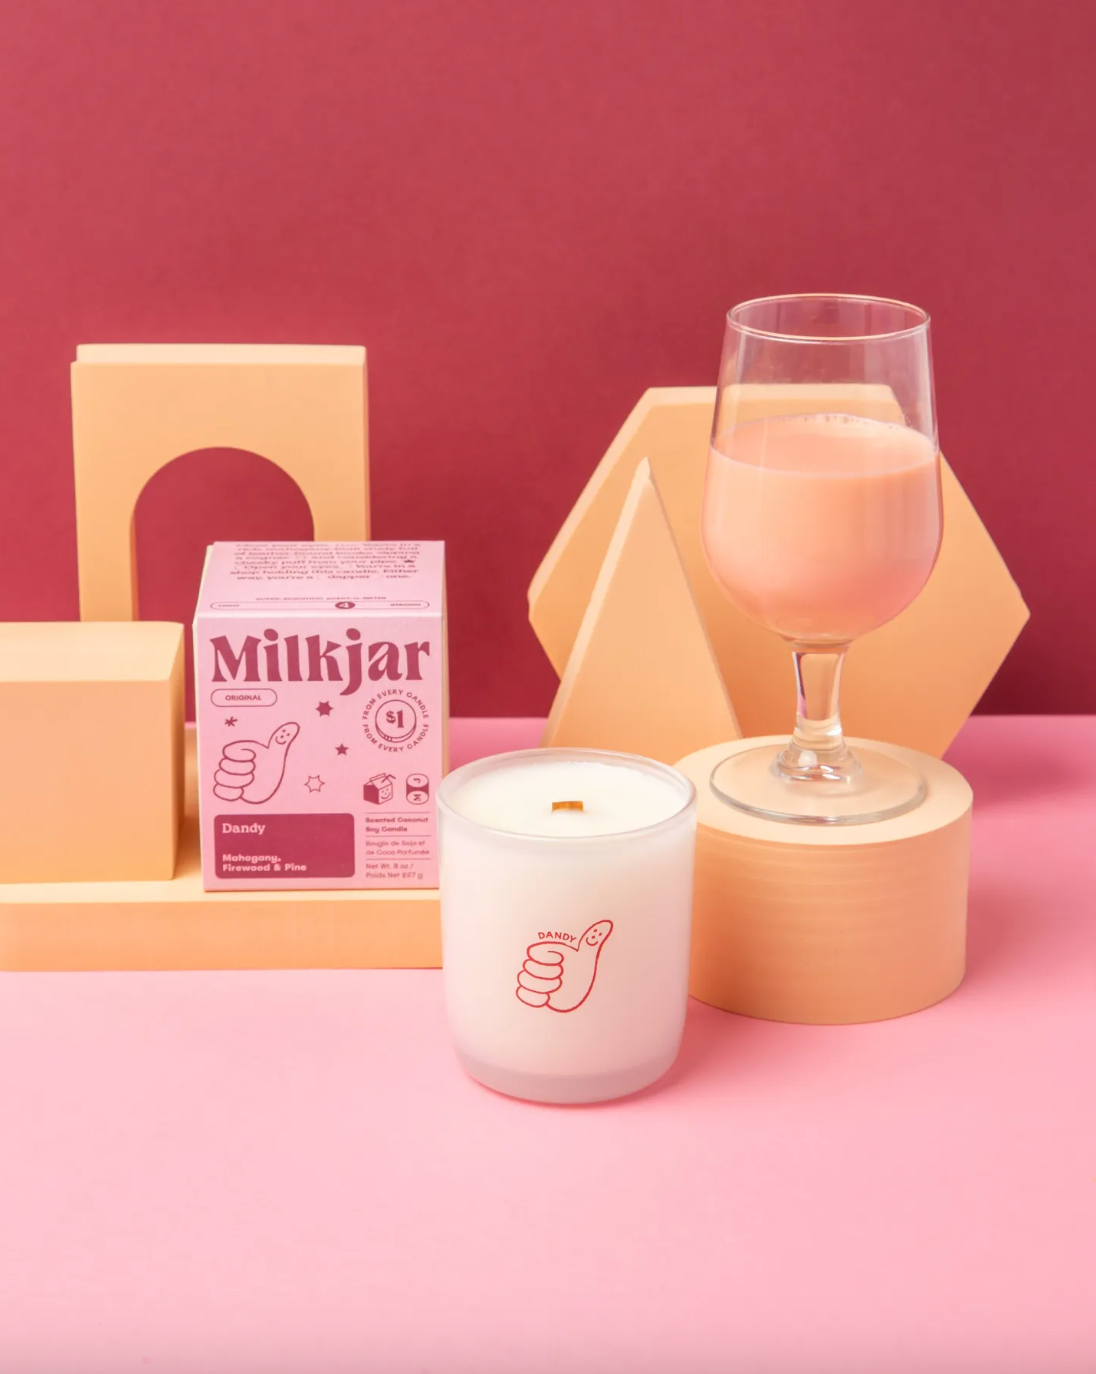 milk jar candle - dandy